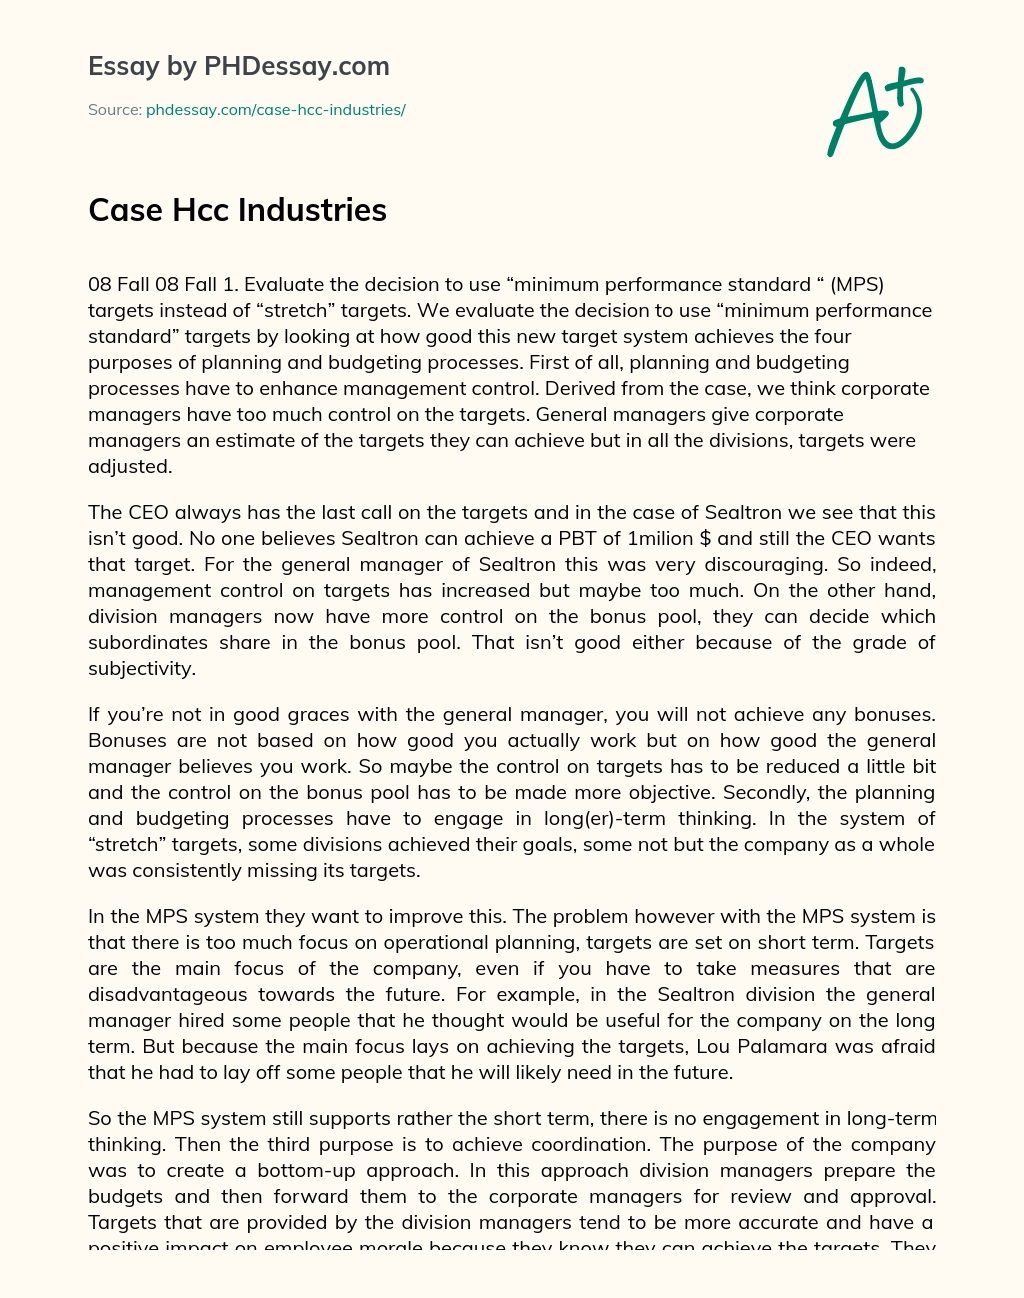 Case Hcc Industries essay